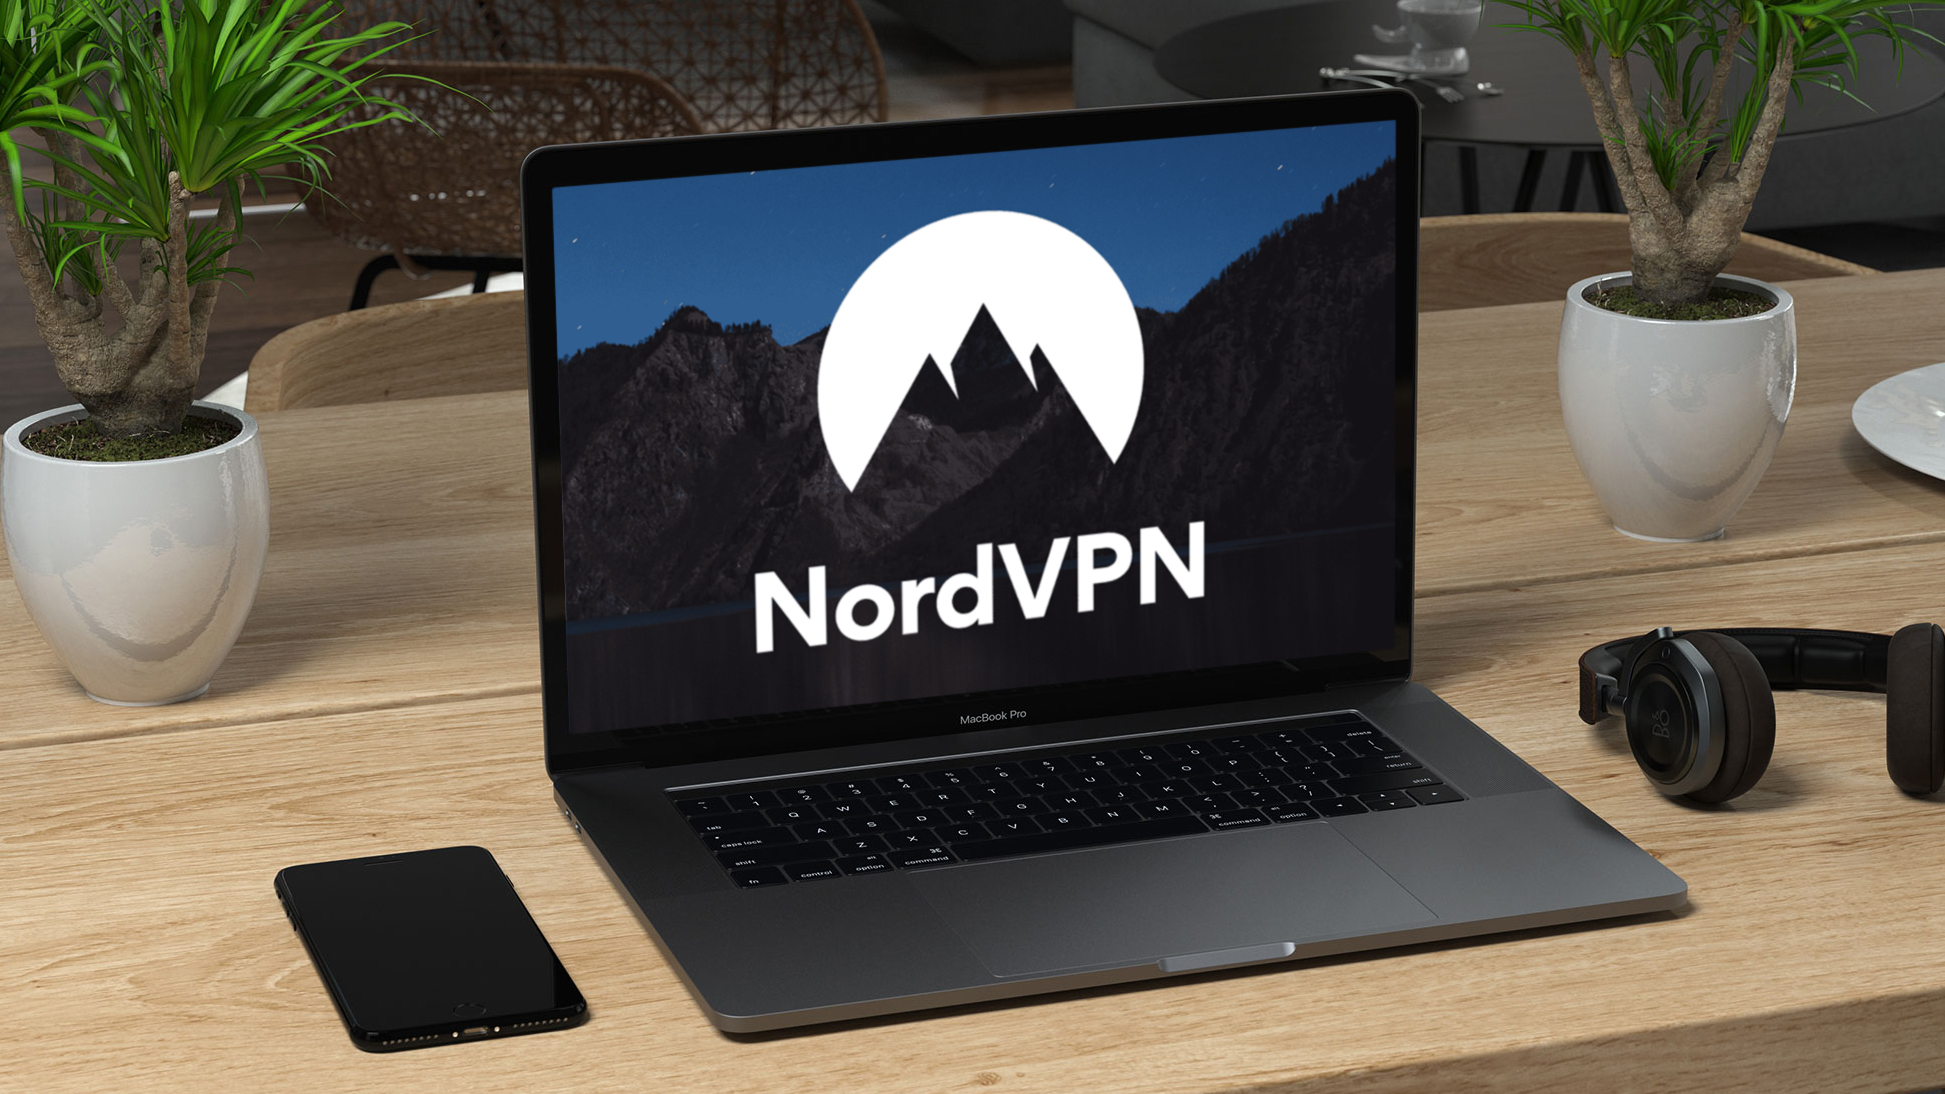 NordVPN 在 MacBook Pro 上运行。